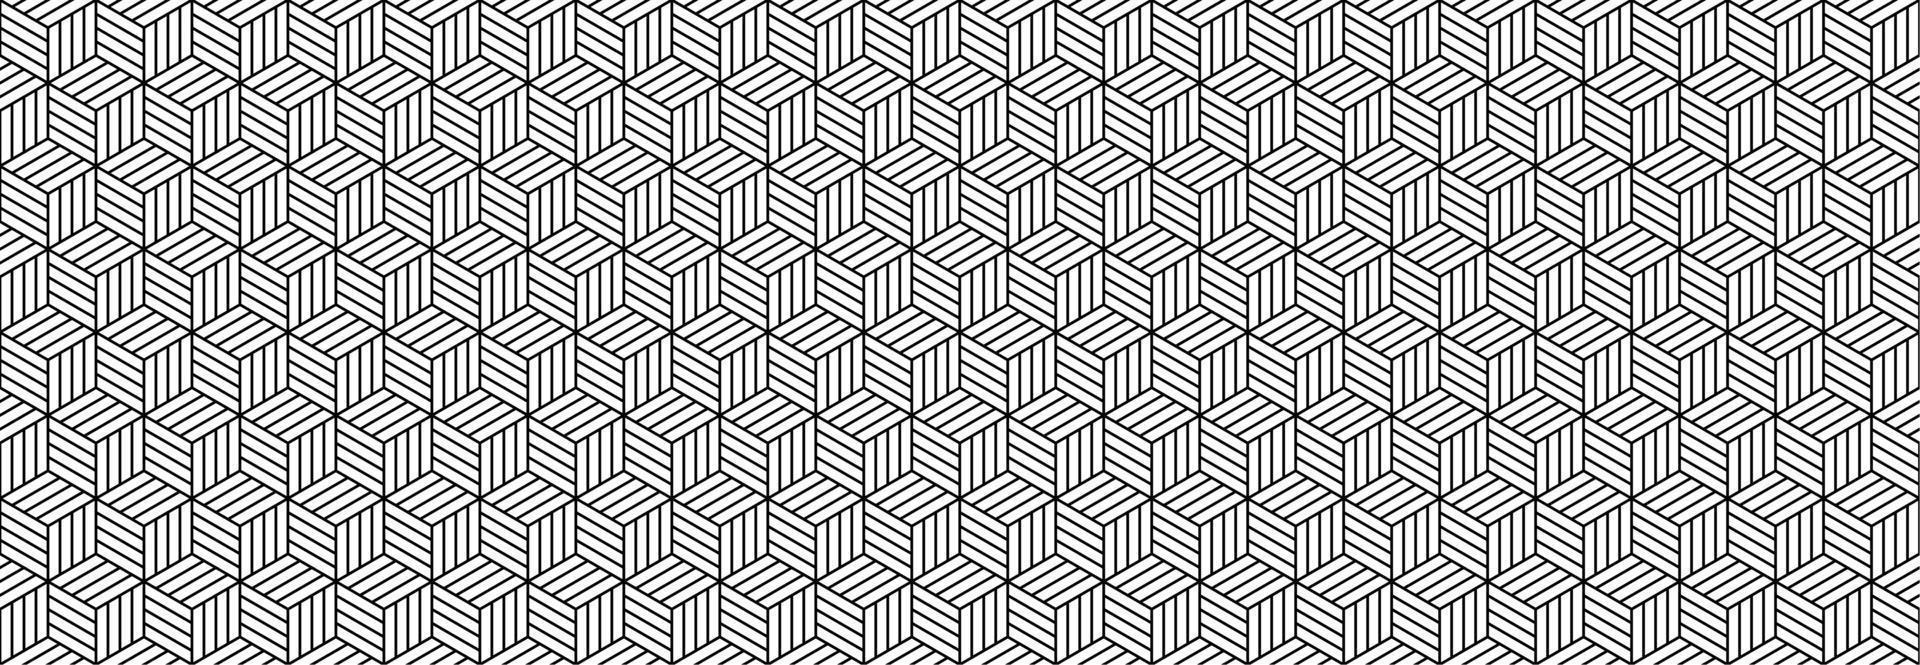 gestreept kubussen naadloos patroon.zeshoekig naadloos patroon vector